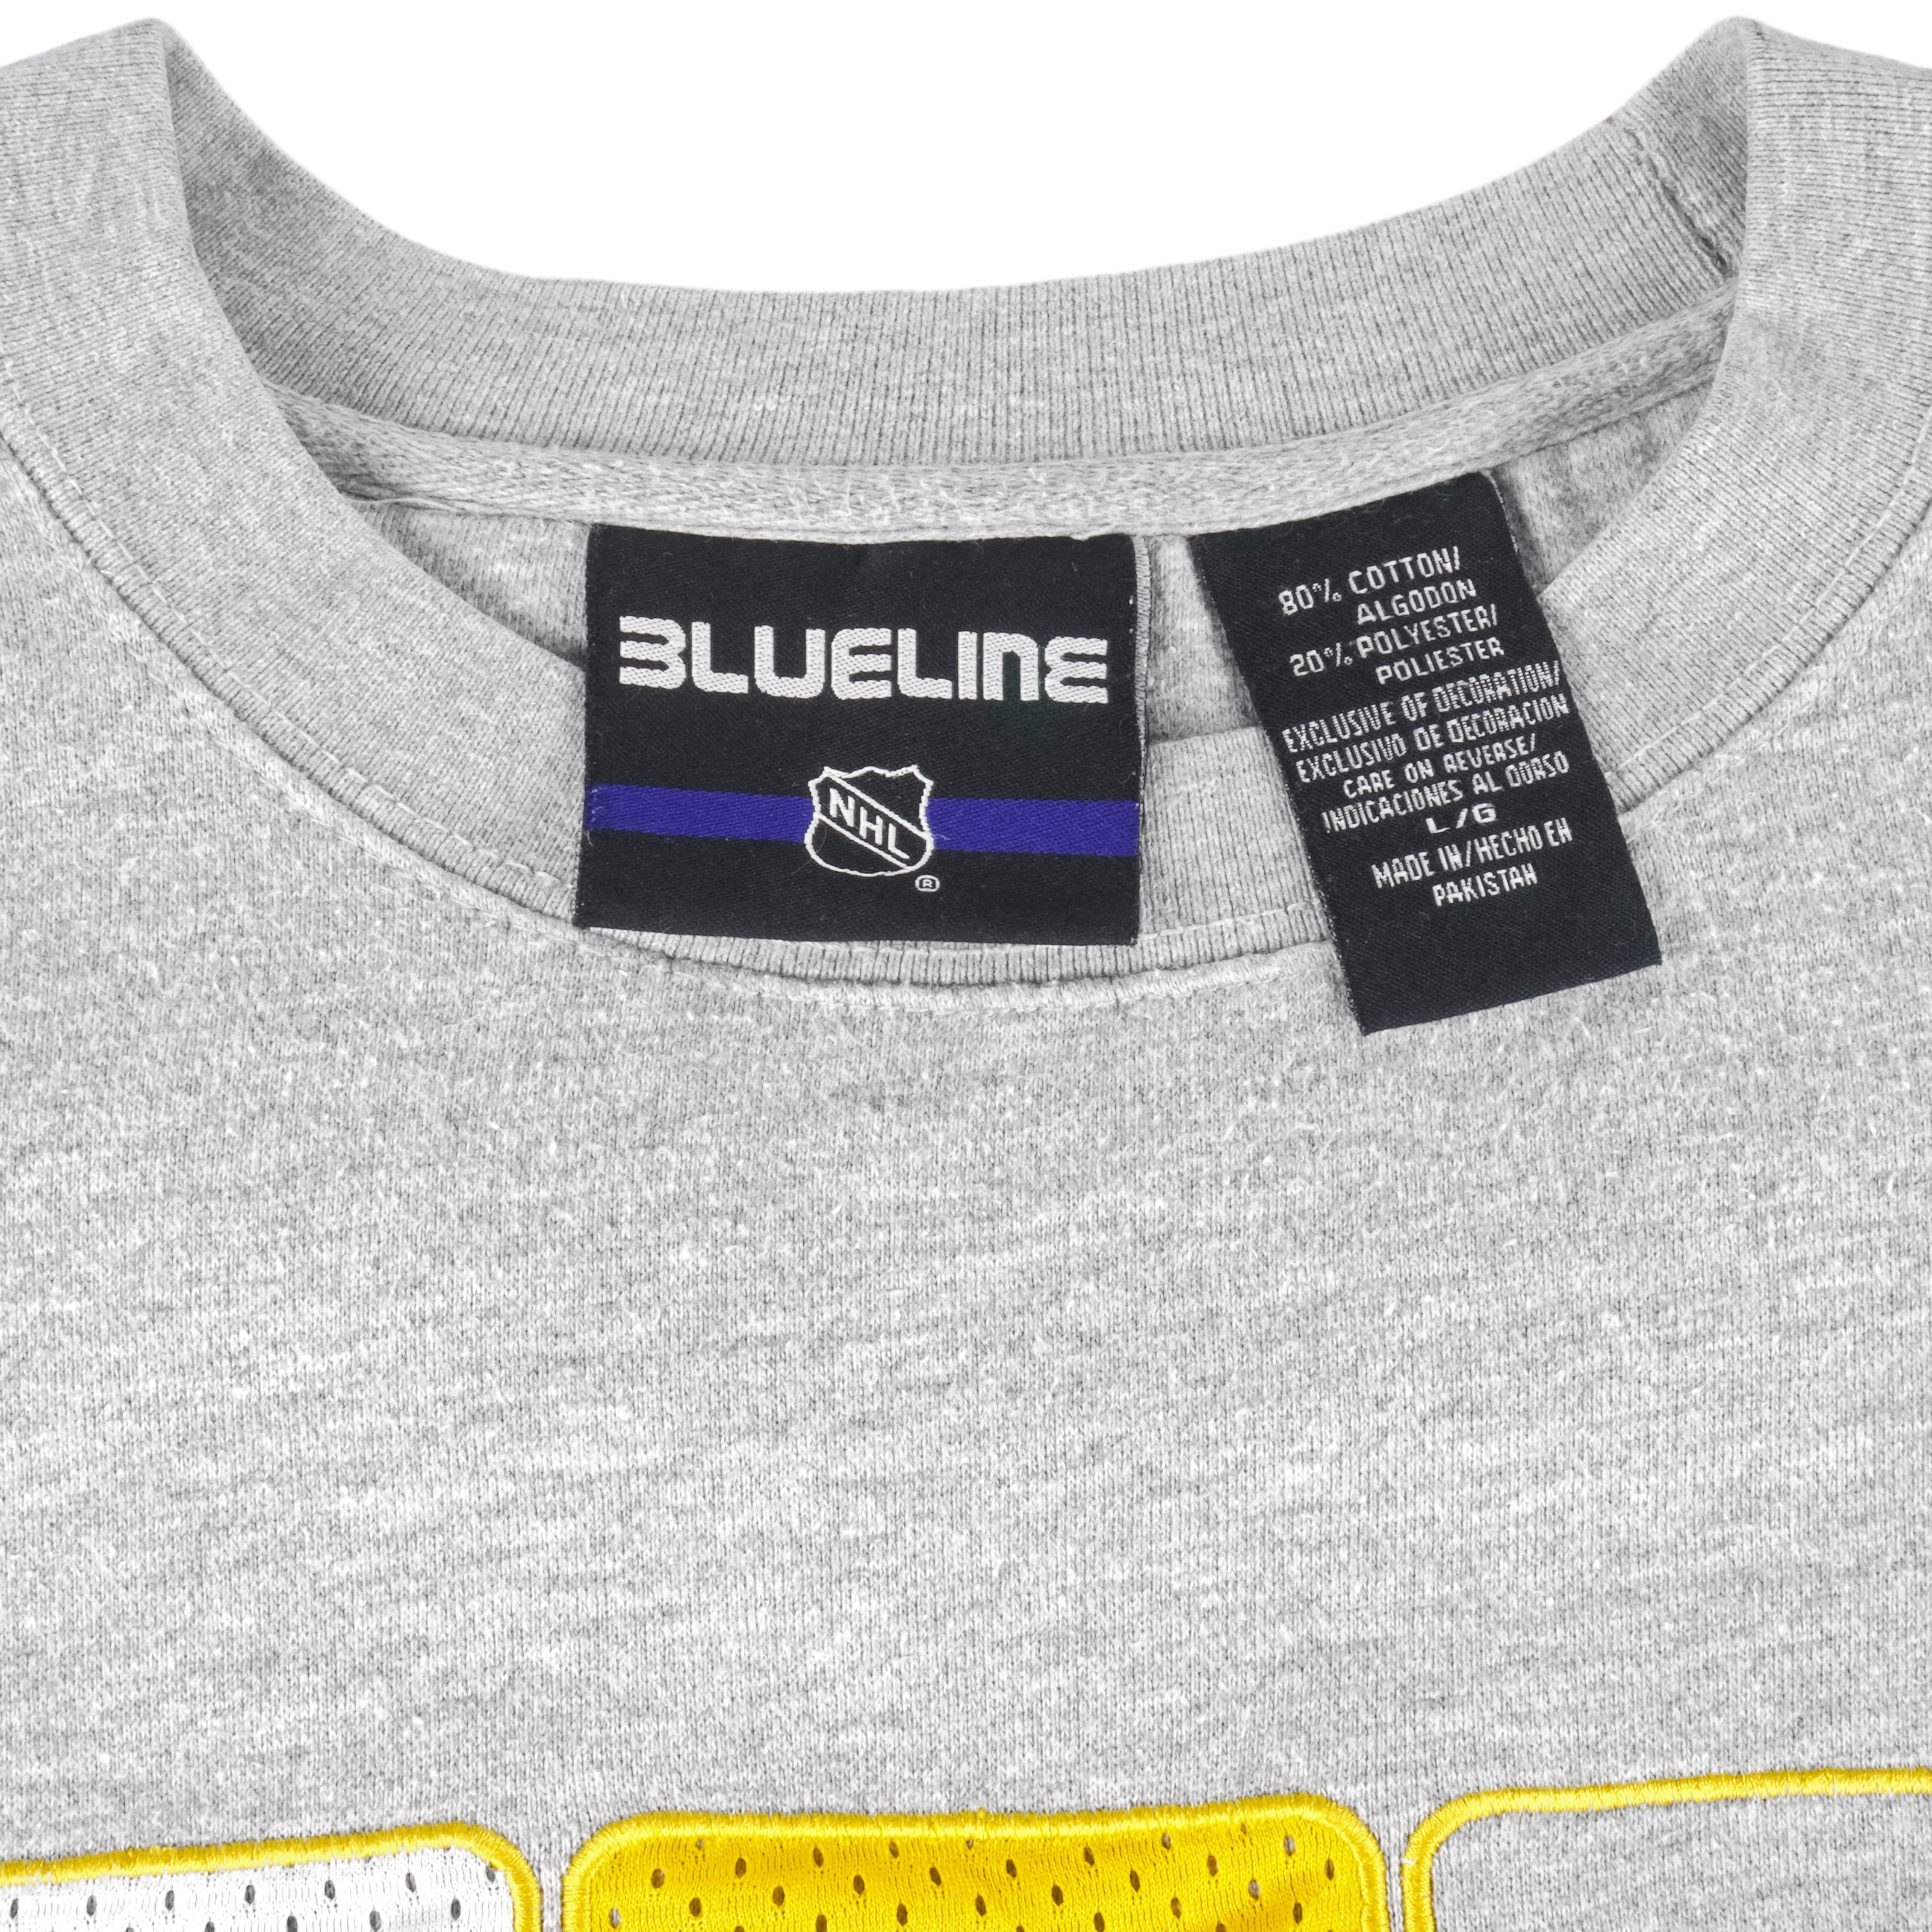 Vintage St. Louis Blues sweatshirt, navy NHL embroidered crewneck - Large